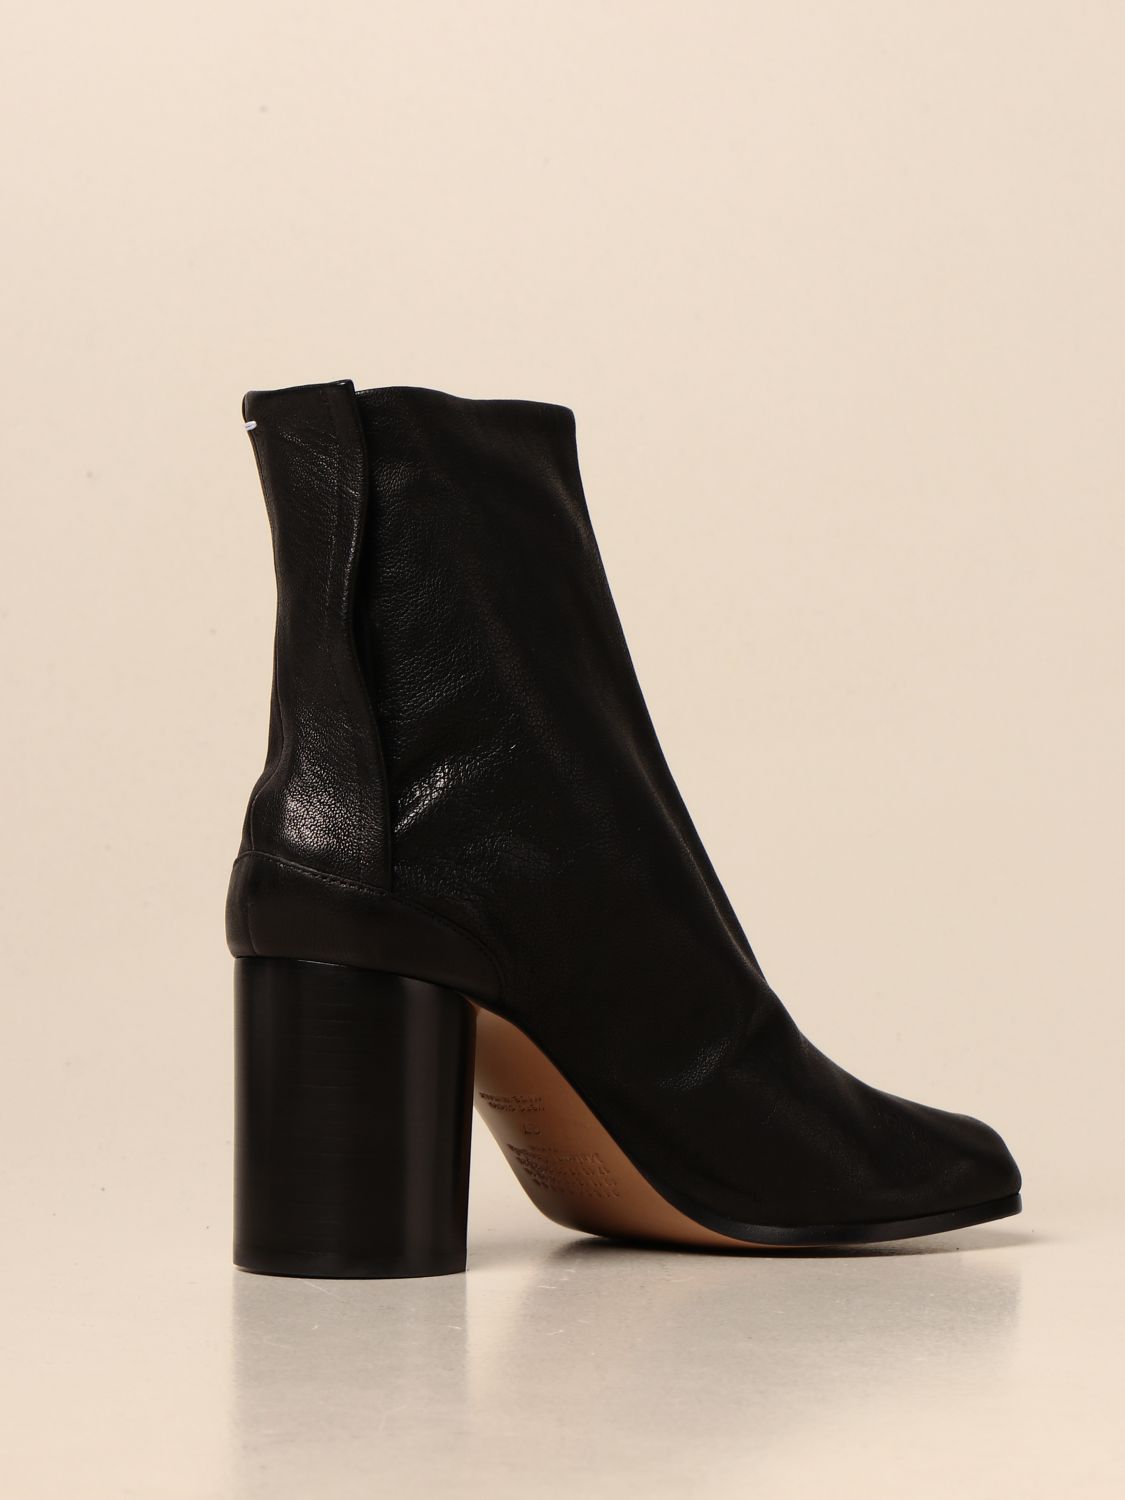 MAISON MARGIELA: Tabi split leather ankle boots | Heeled Booties Maison